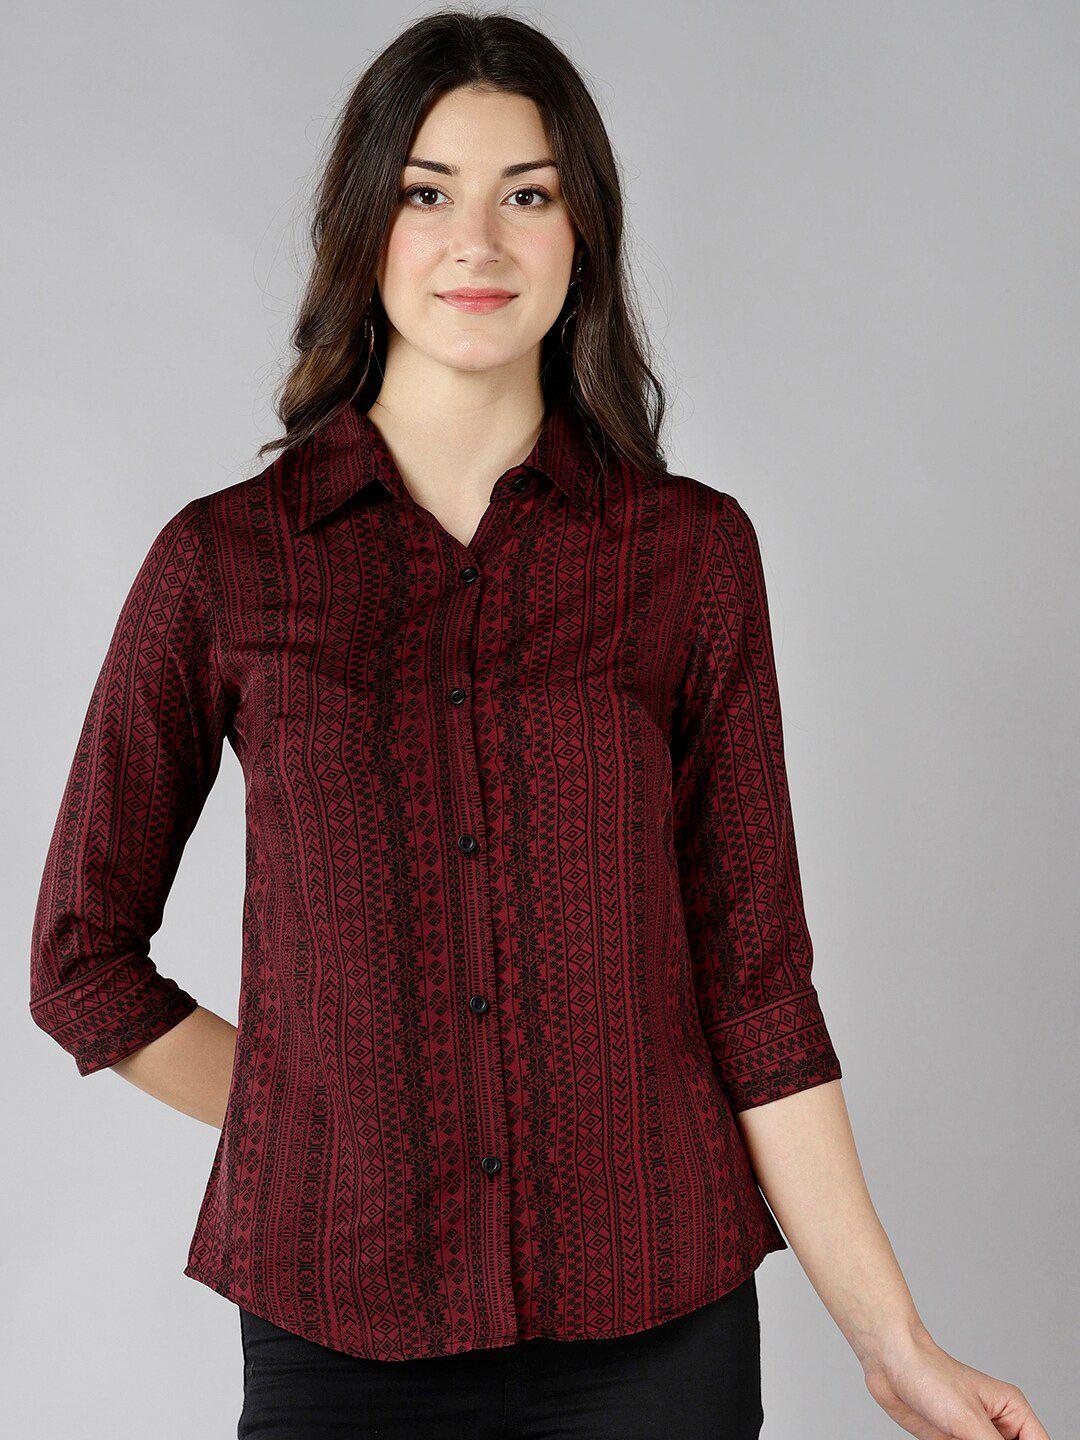 znx clothing women maroon classic printed casual shirt